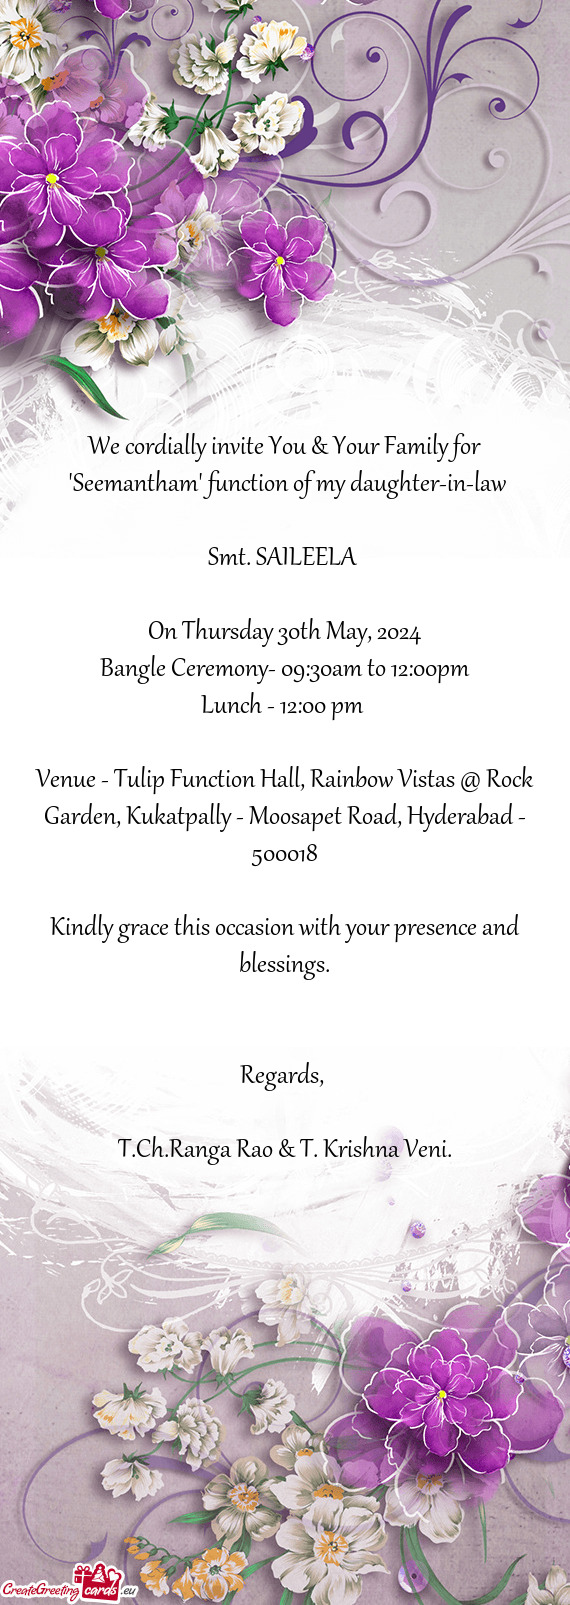 Bangle Ceremony- 09:30am to 12:00pm